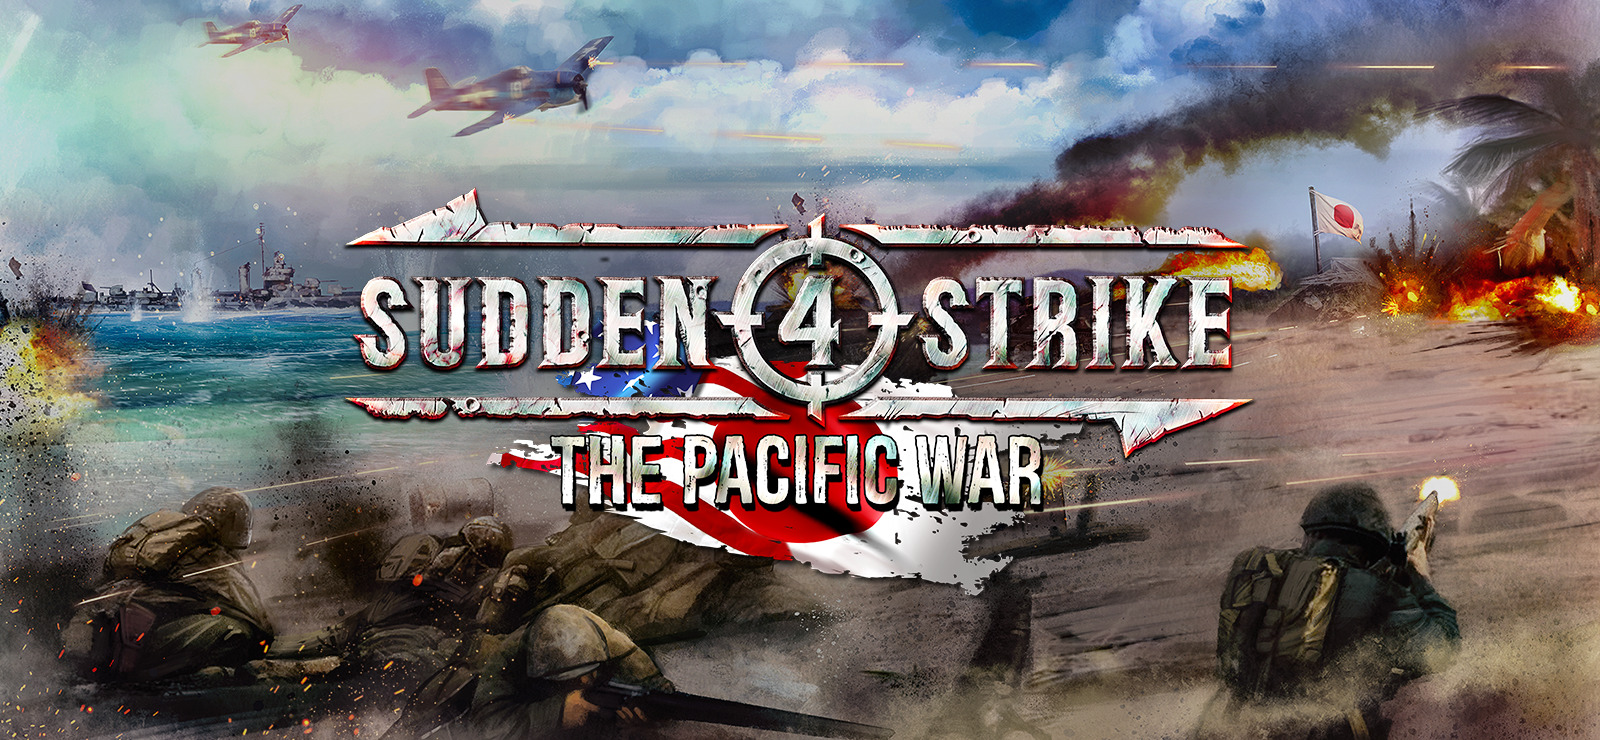 sudden strike 4 trailer